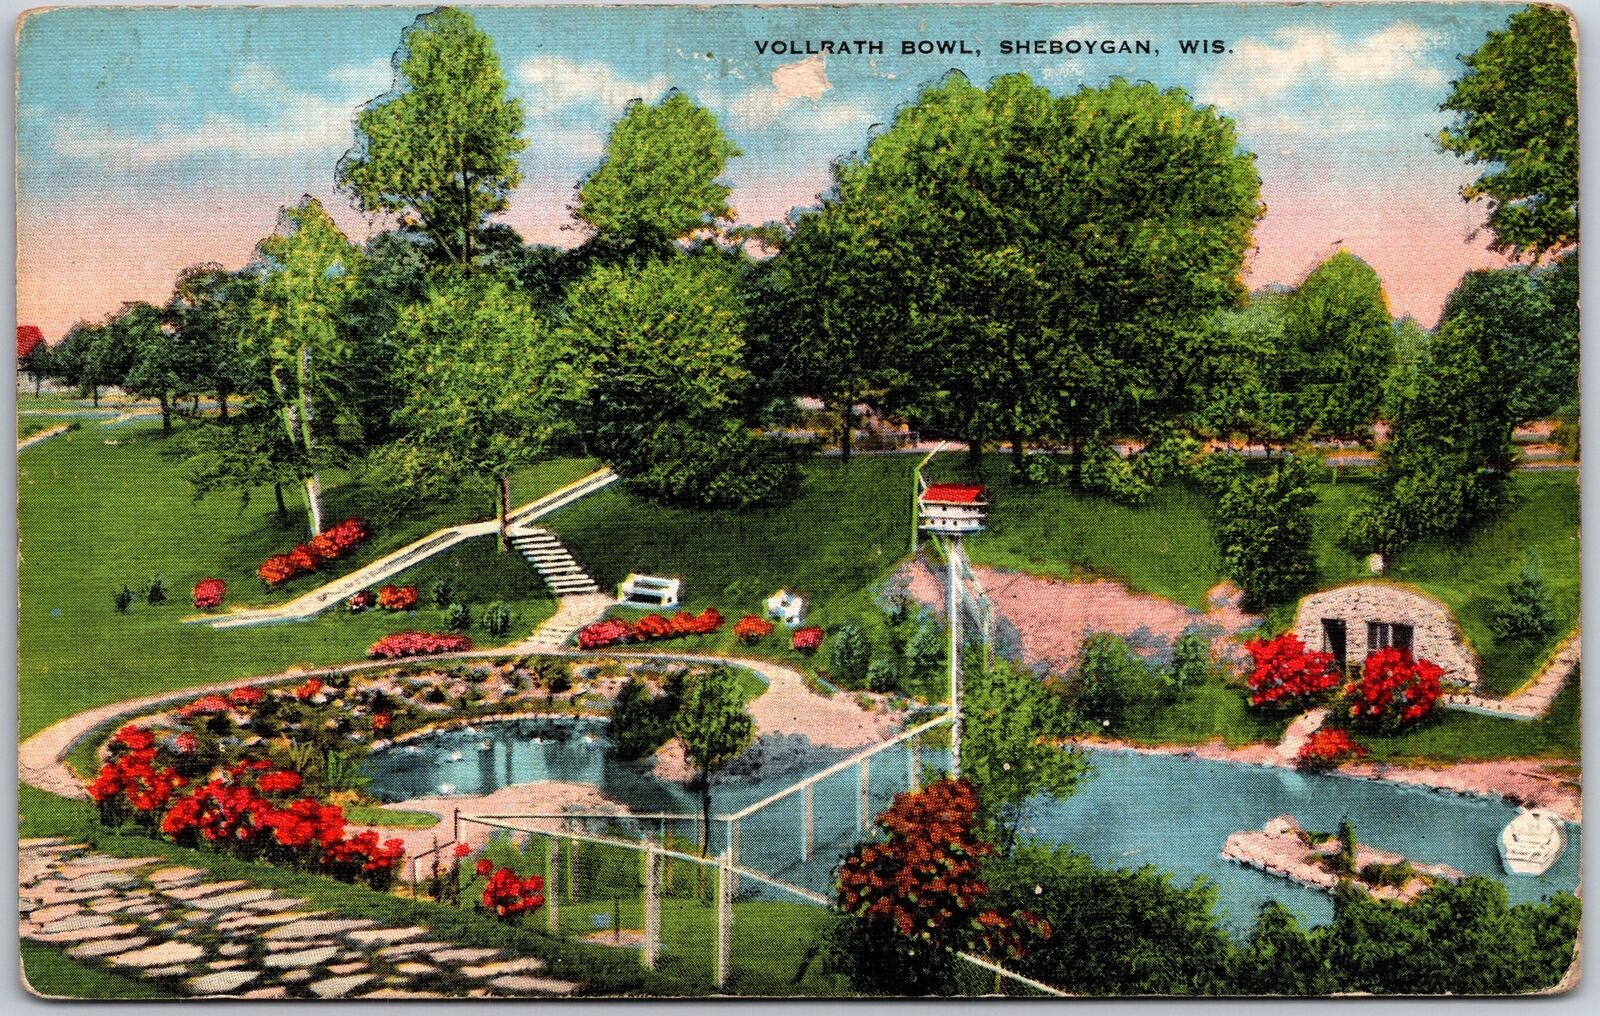 Sheboygan Wisconsin WI, 1940 Vollrath Bowl, Park, Pond, Greenfield, Postcard